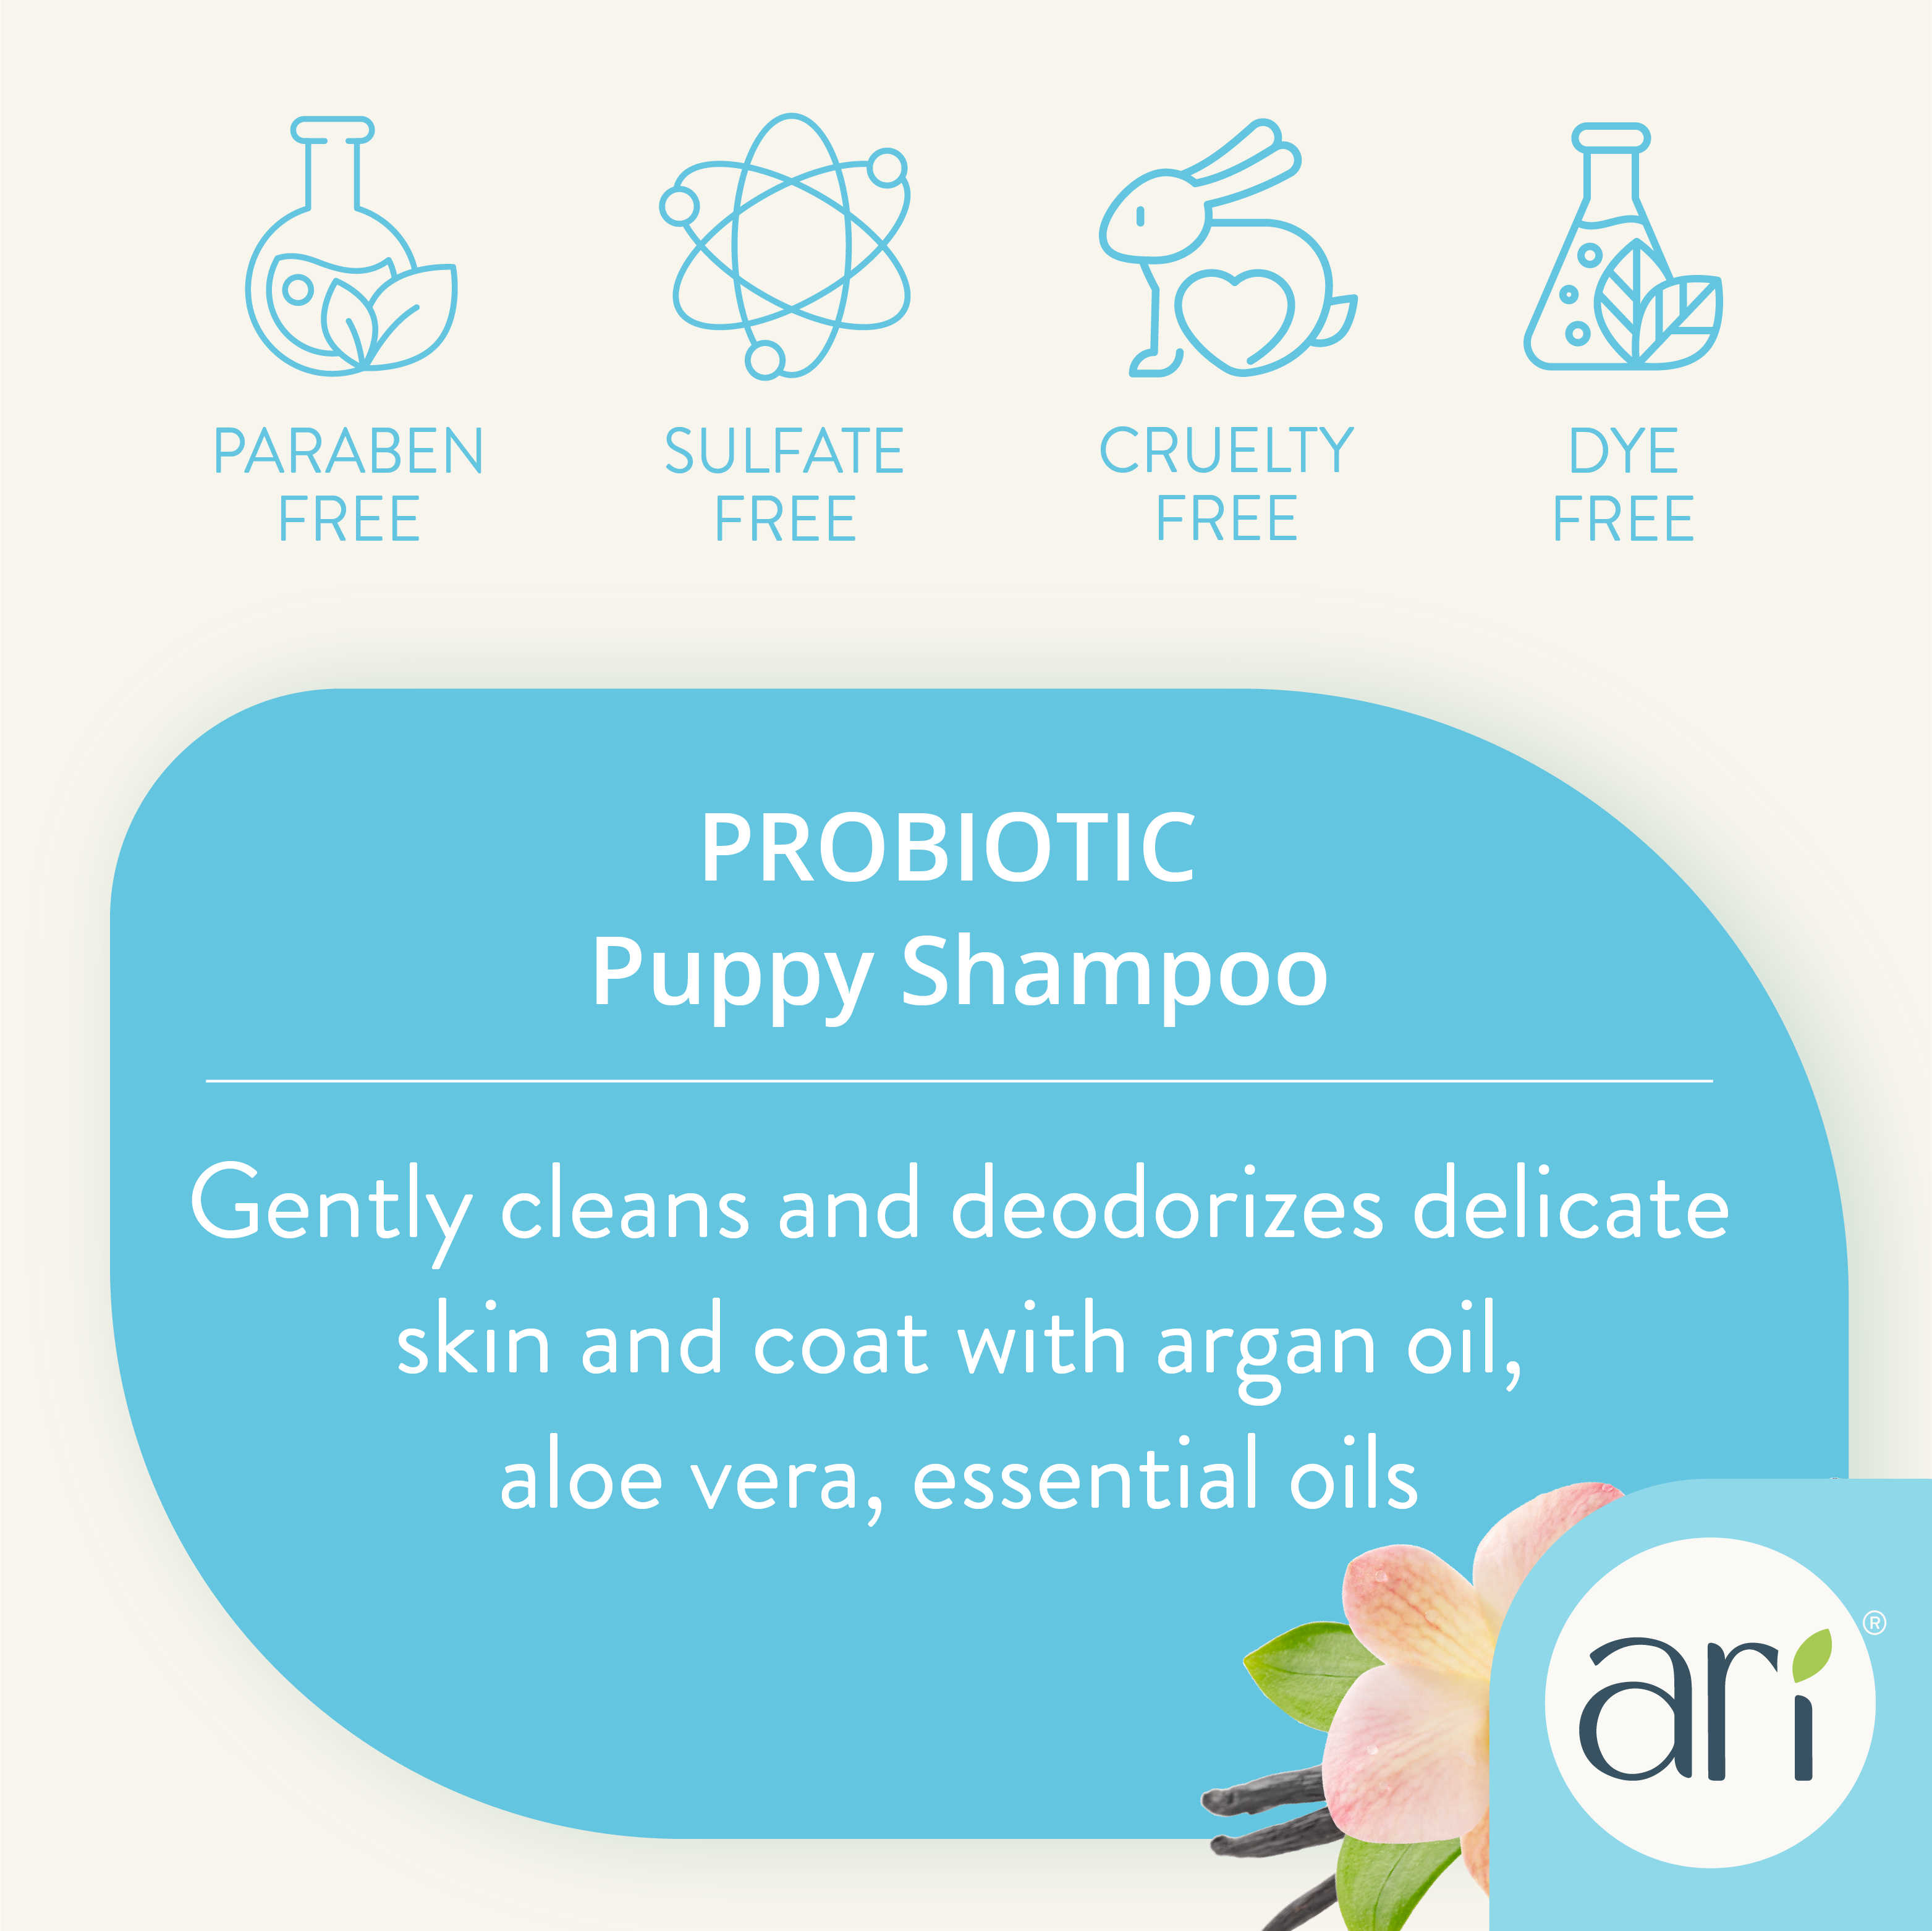 ARI Probiotic Puppy Shampoo